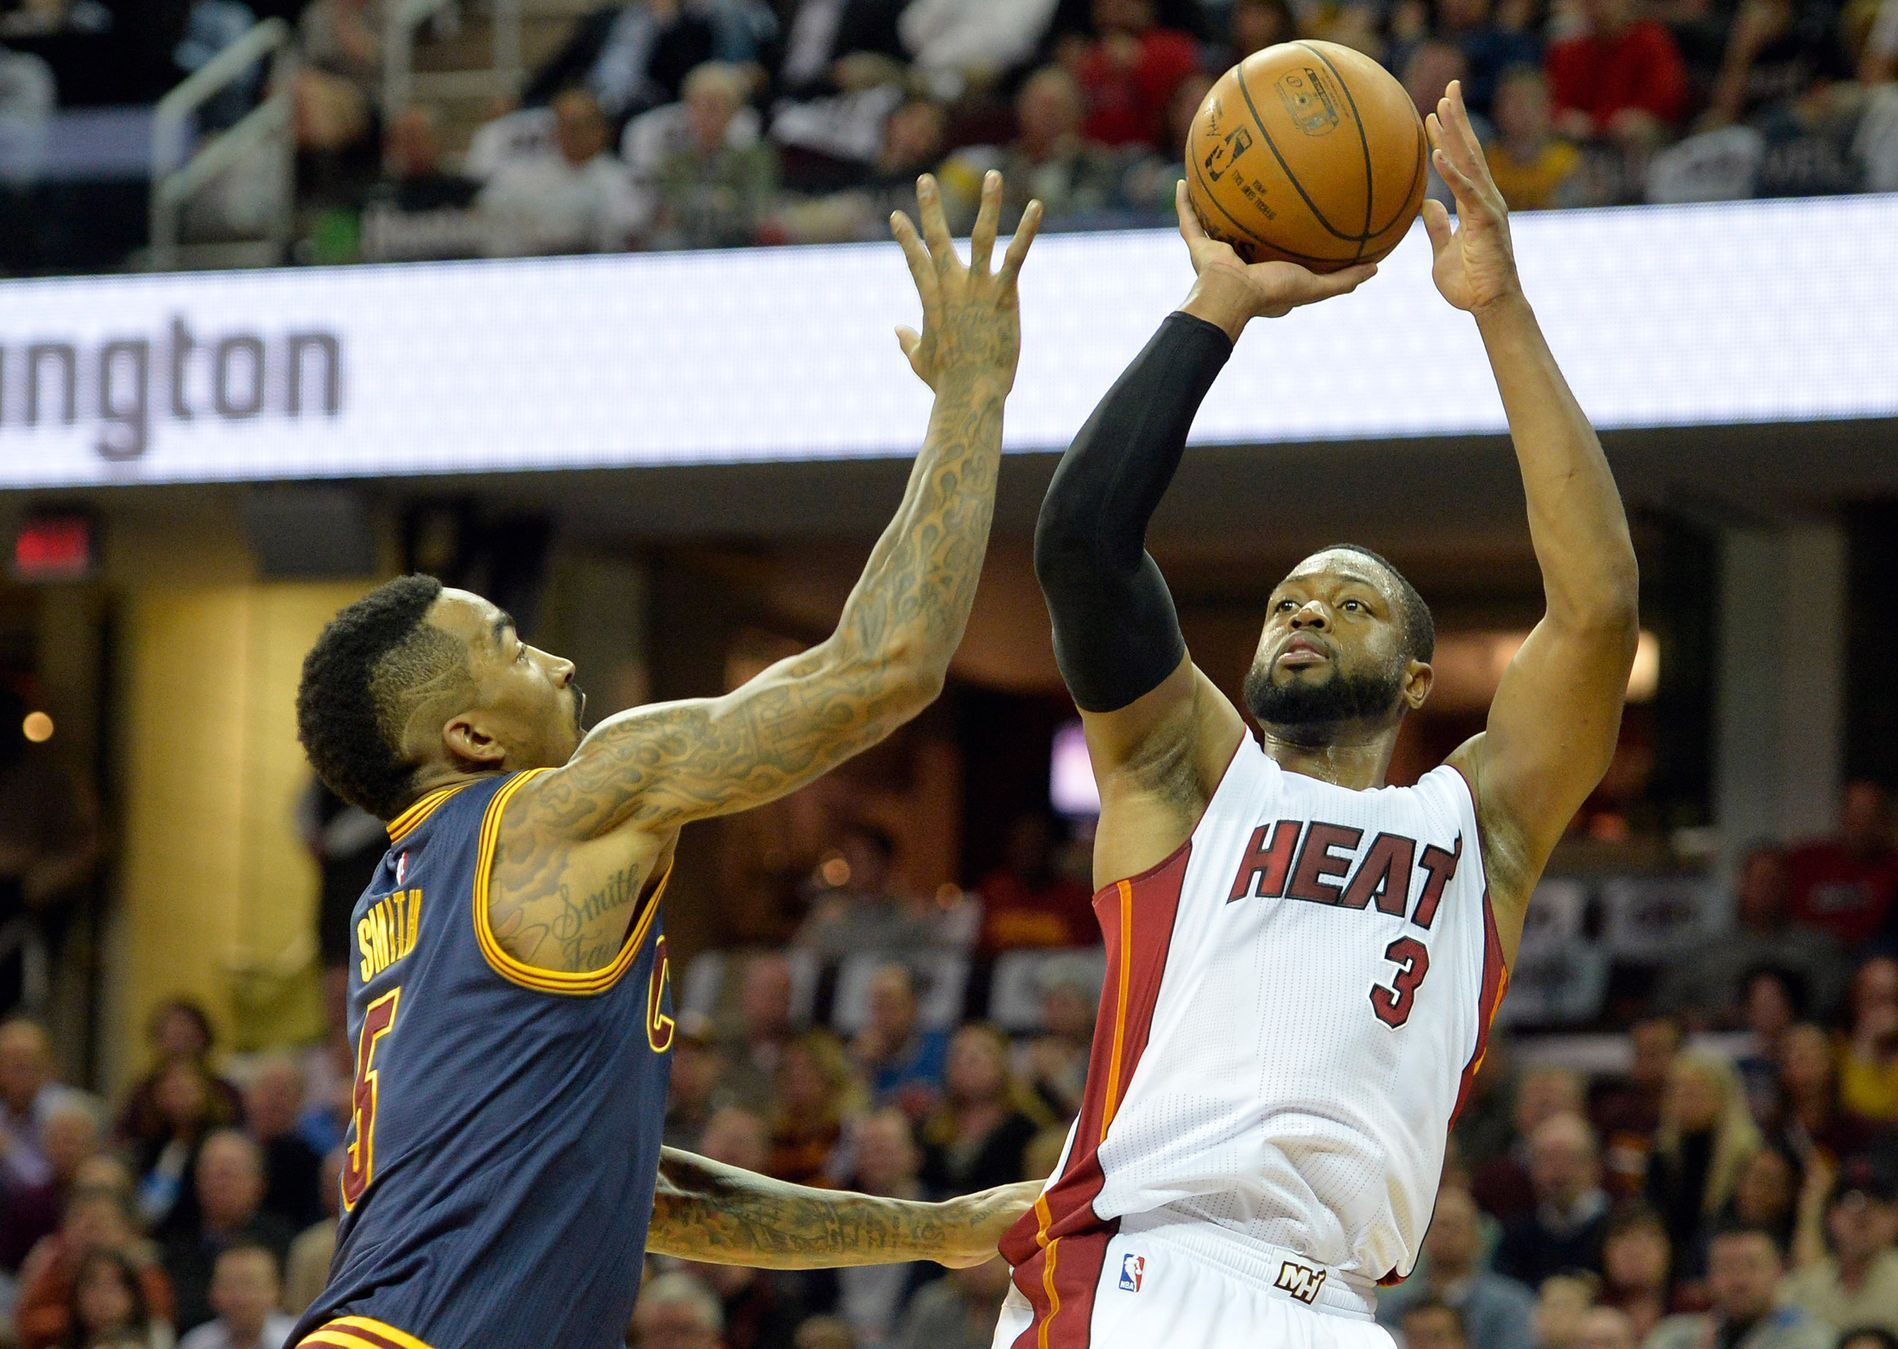 Miami Heat (J.R. Smith) vs. Cleveland Cavaliers (Dwayne Wade)